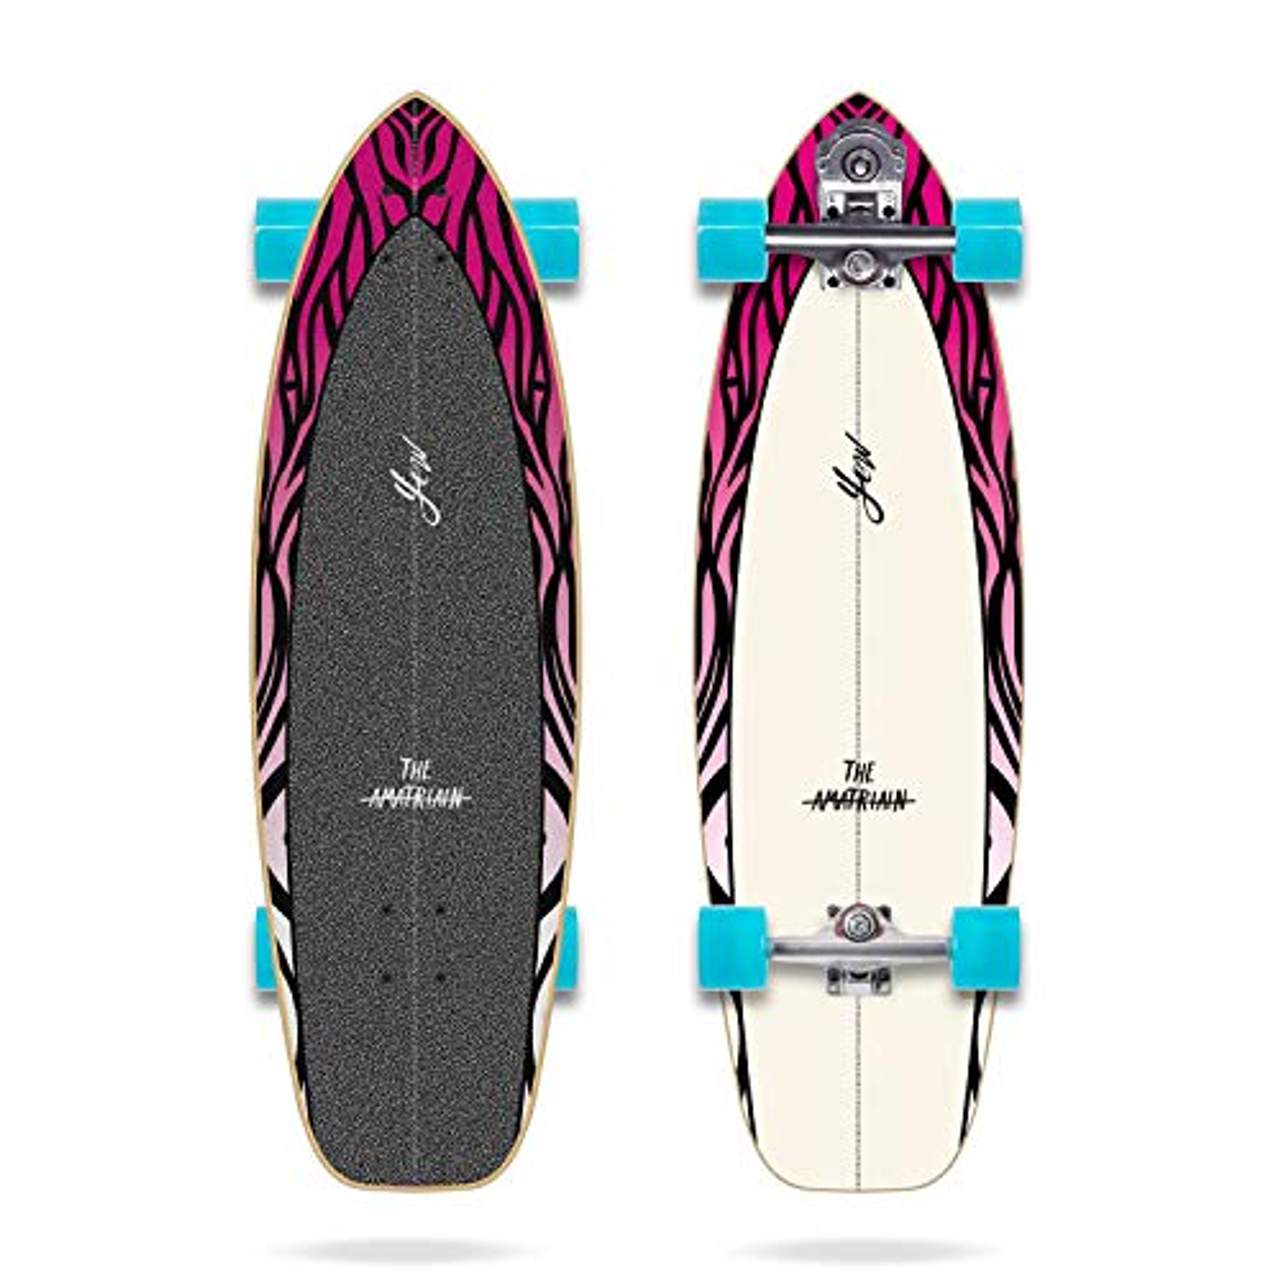 Yow Amatriain Signature Series Surfskate Skateboard